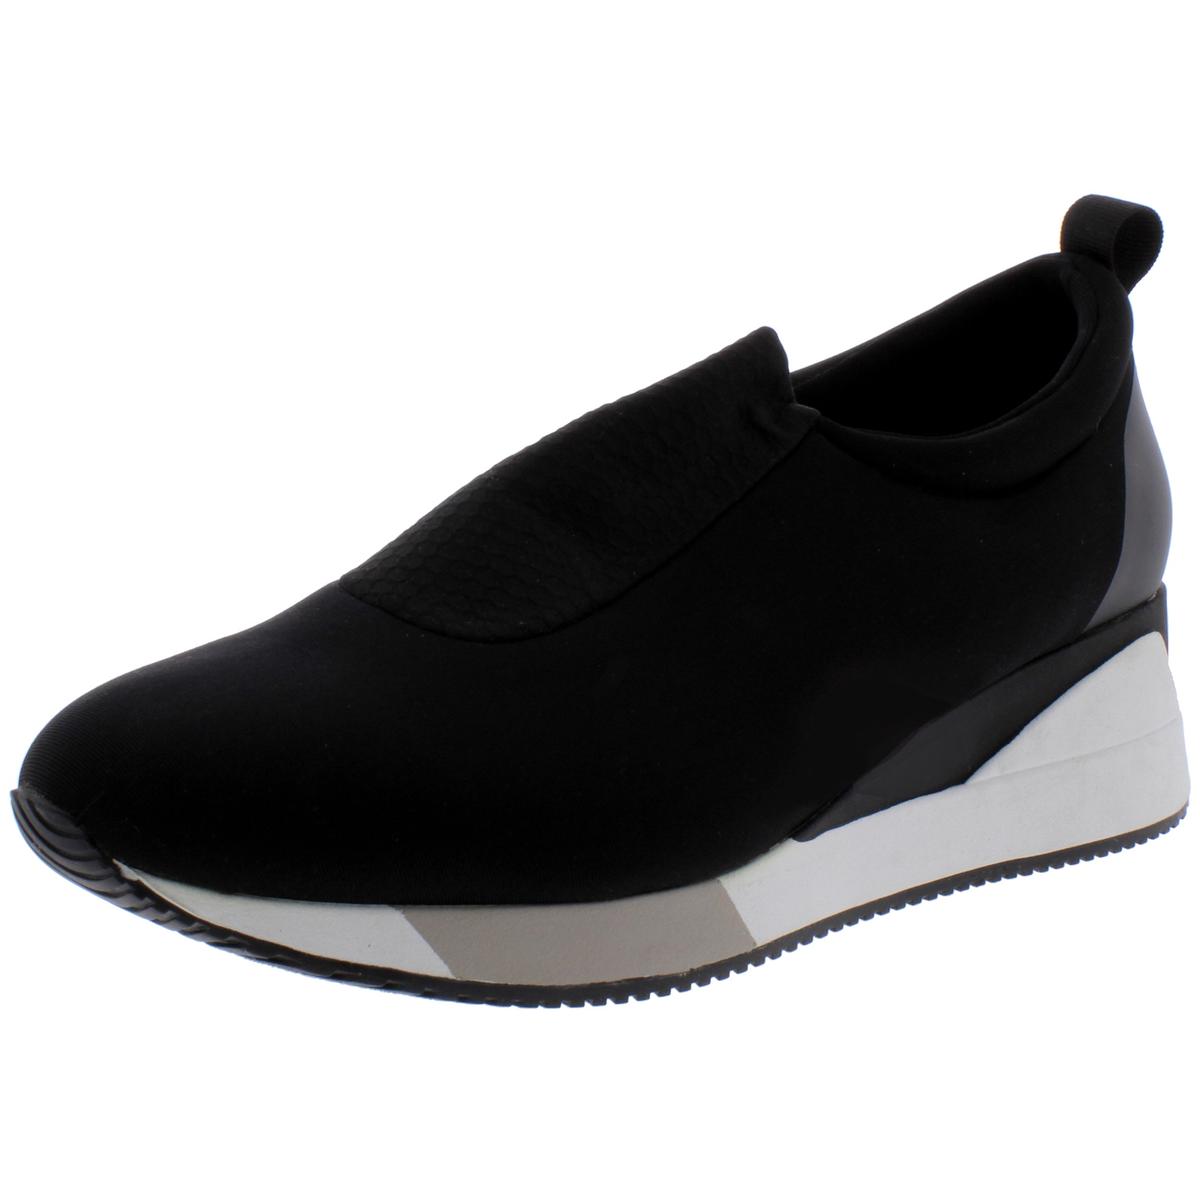 Ideology Womens Black Slip On Wedge Sneaker Shoes 8 Medium (B,M) BHFO ...